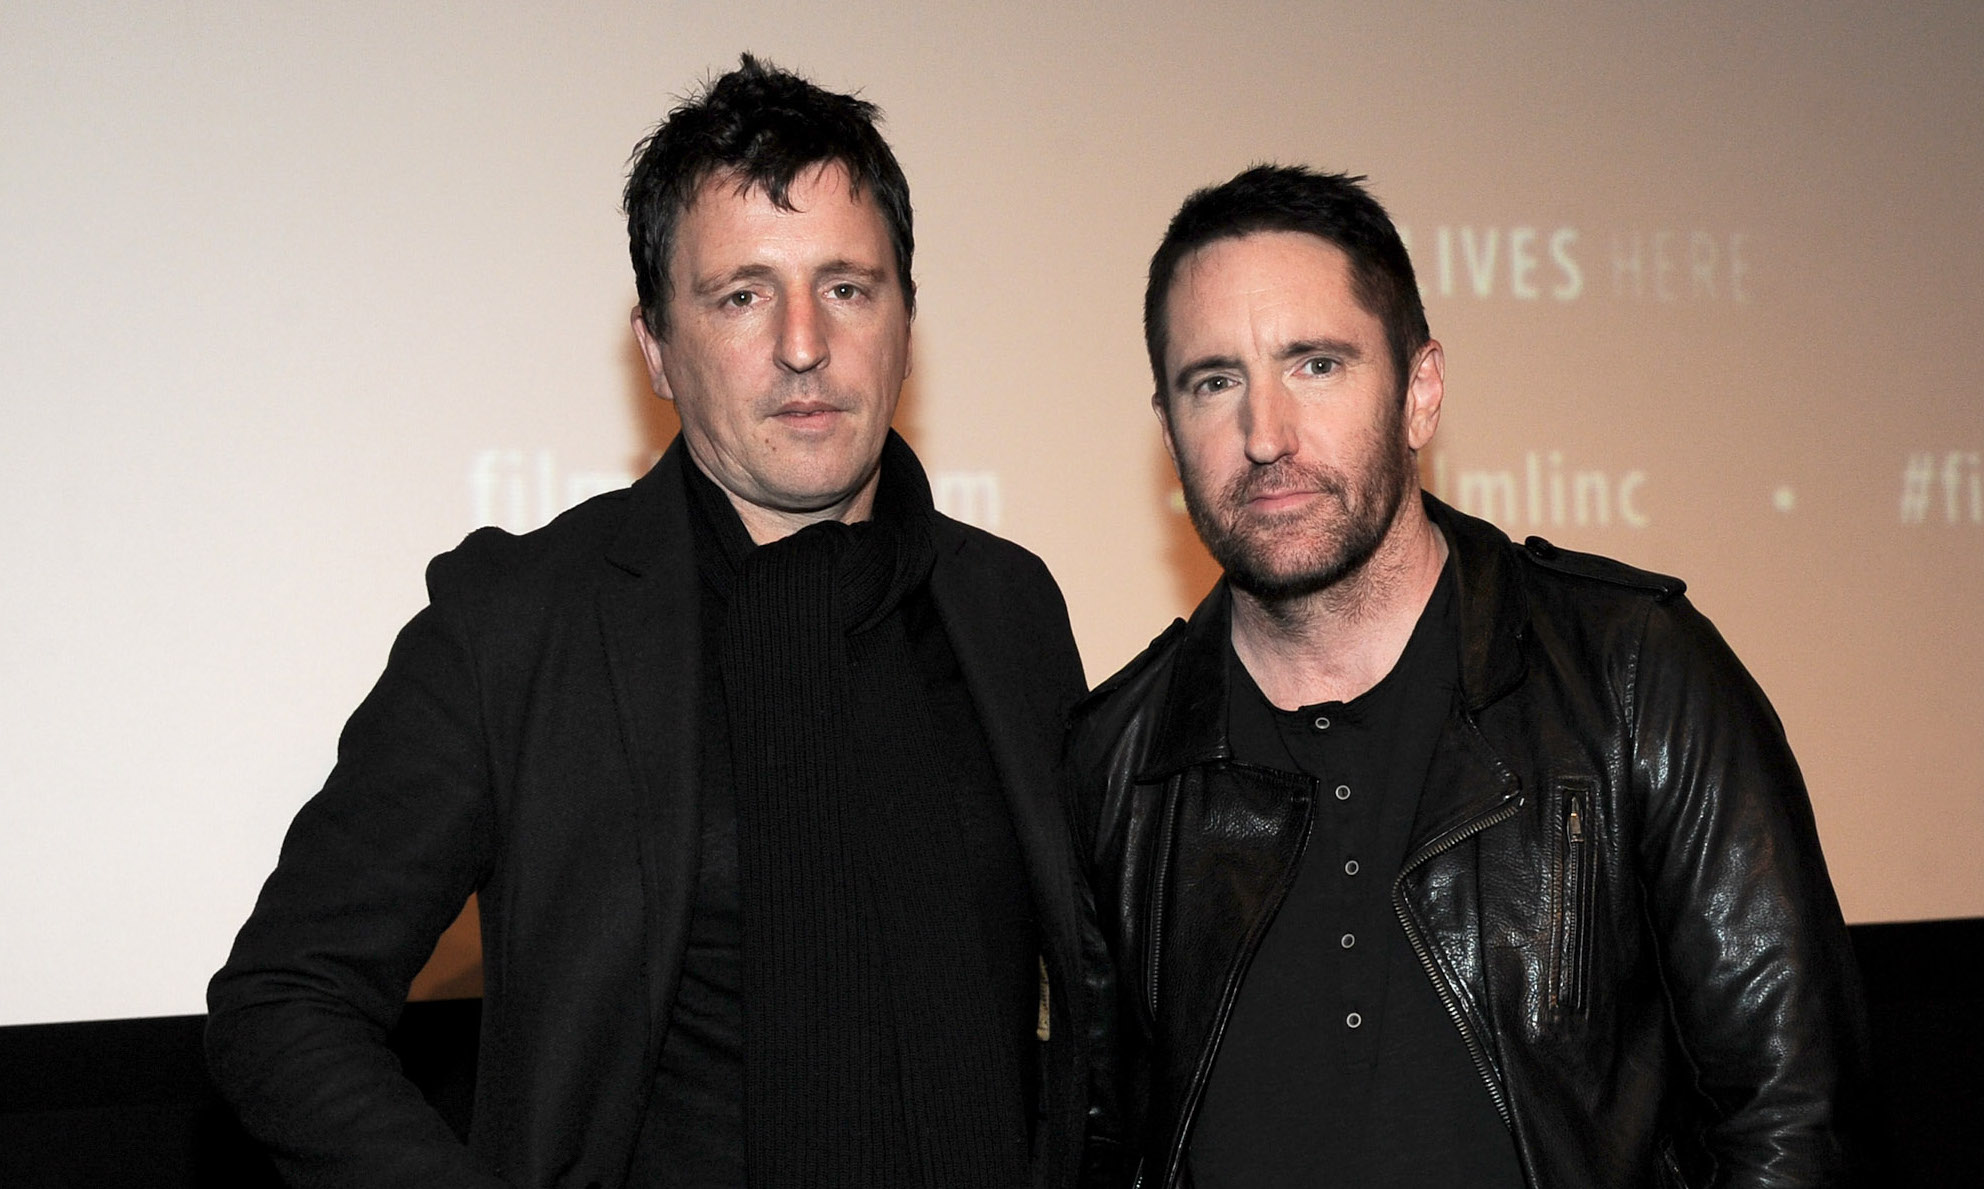 Trent Reznor and Atticus Ross To Score New Pixar Film 'Soul'